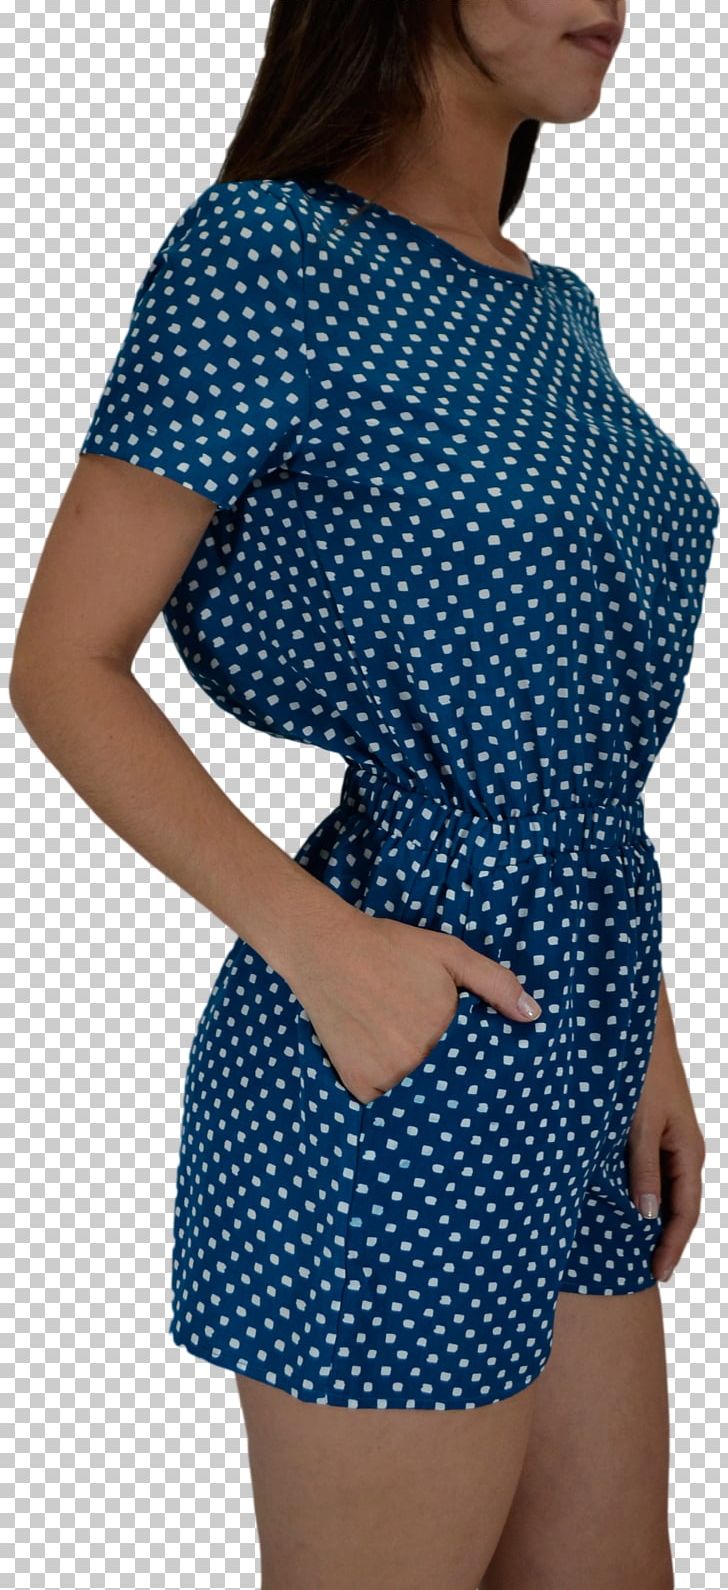 Polka Dot Shoulder Top Blouse Sleeve PNG, Clipart, Blouse, Blue, Clothing, Cobalt Blue, Day Dress Free PNG Download